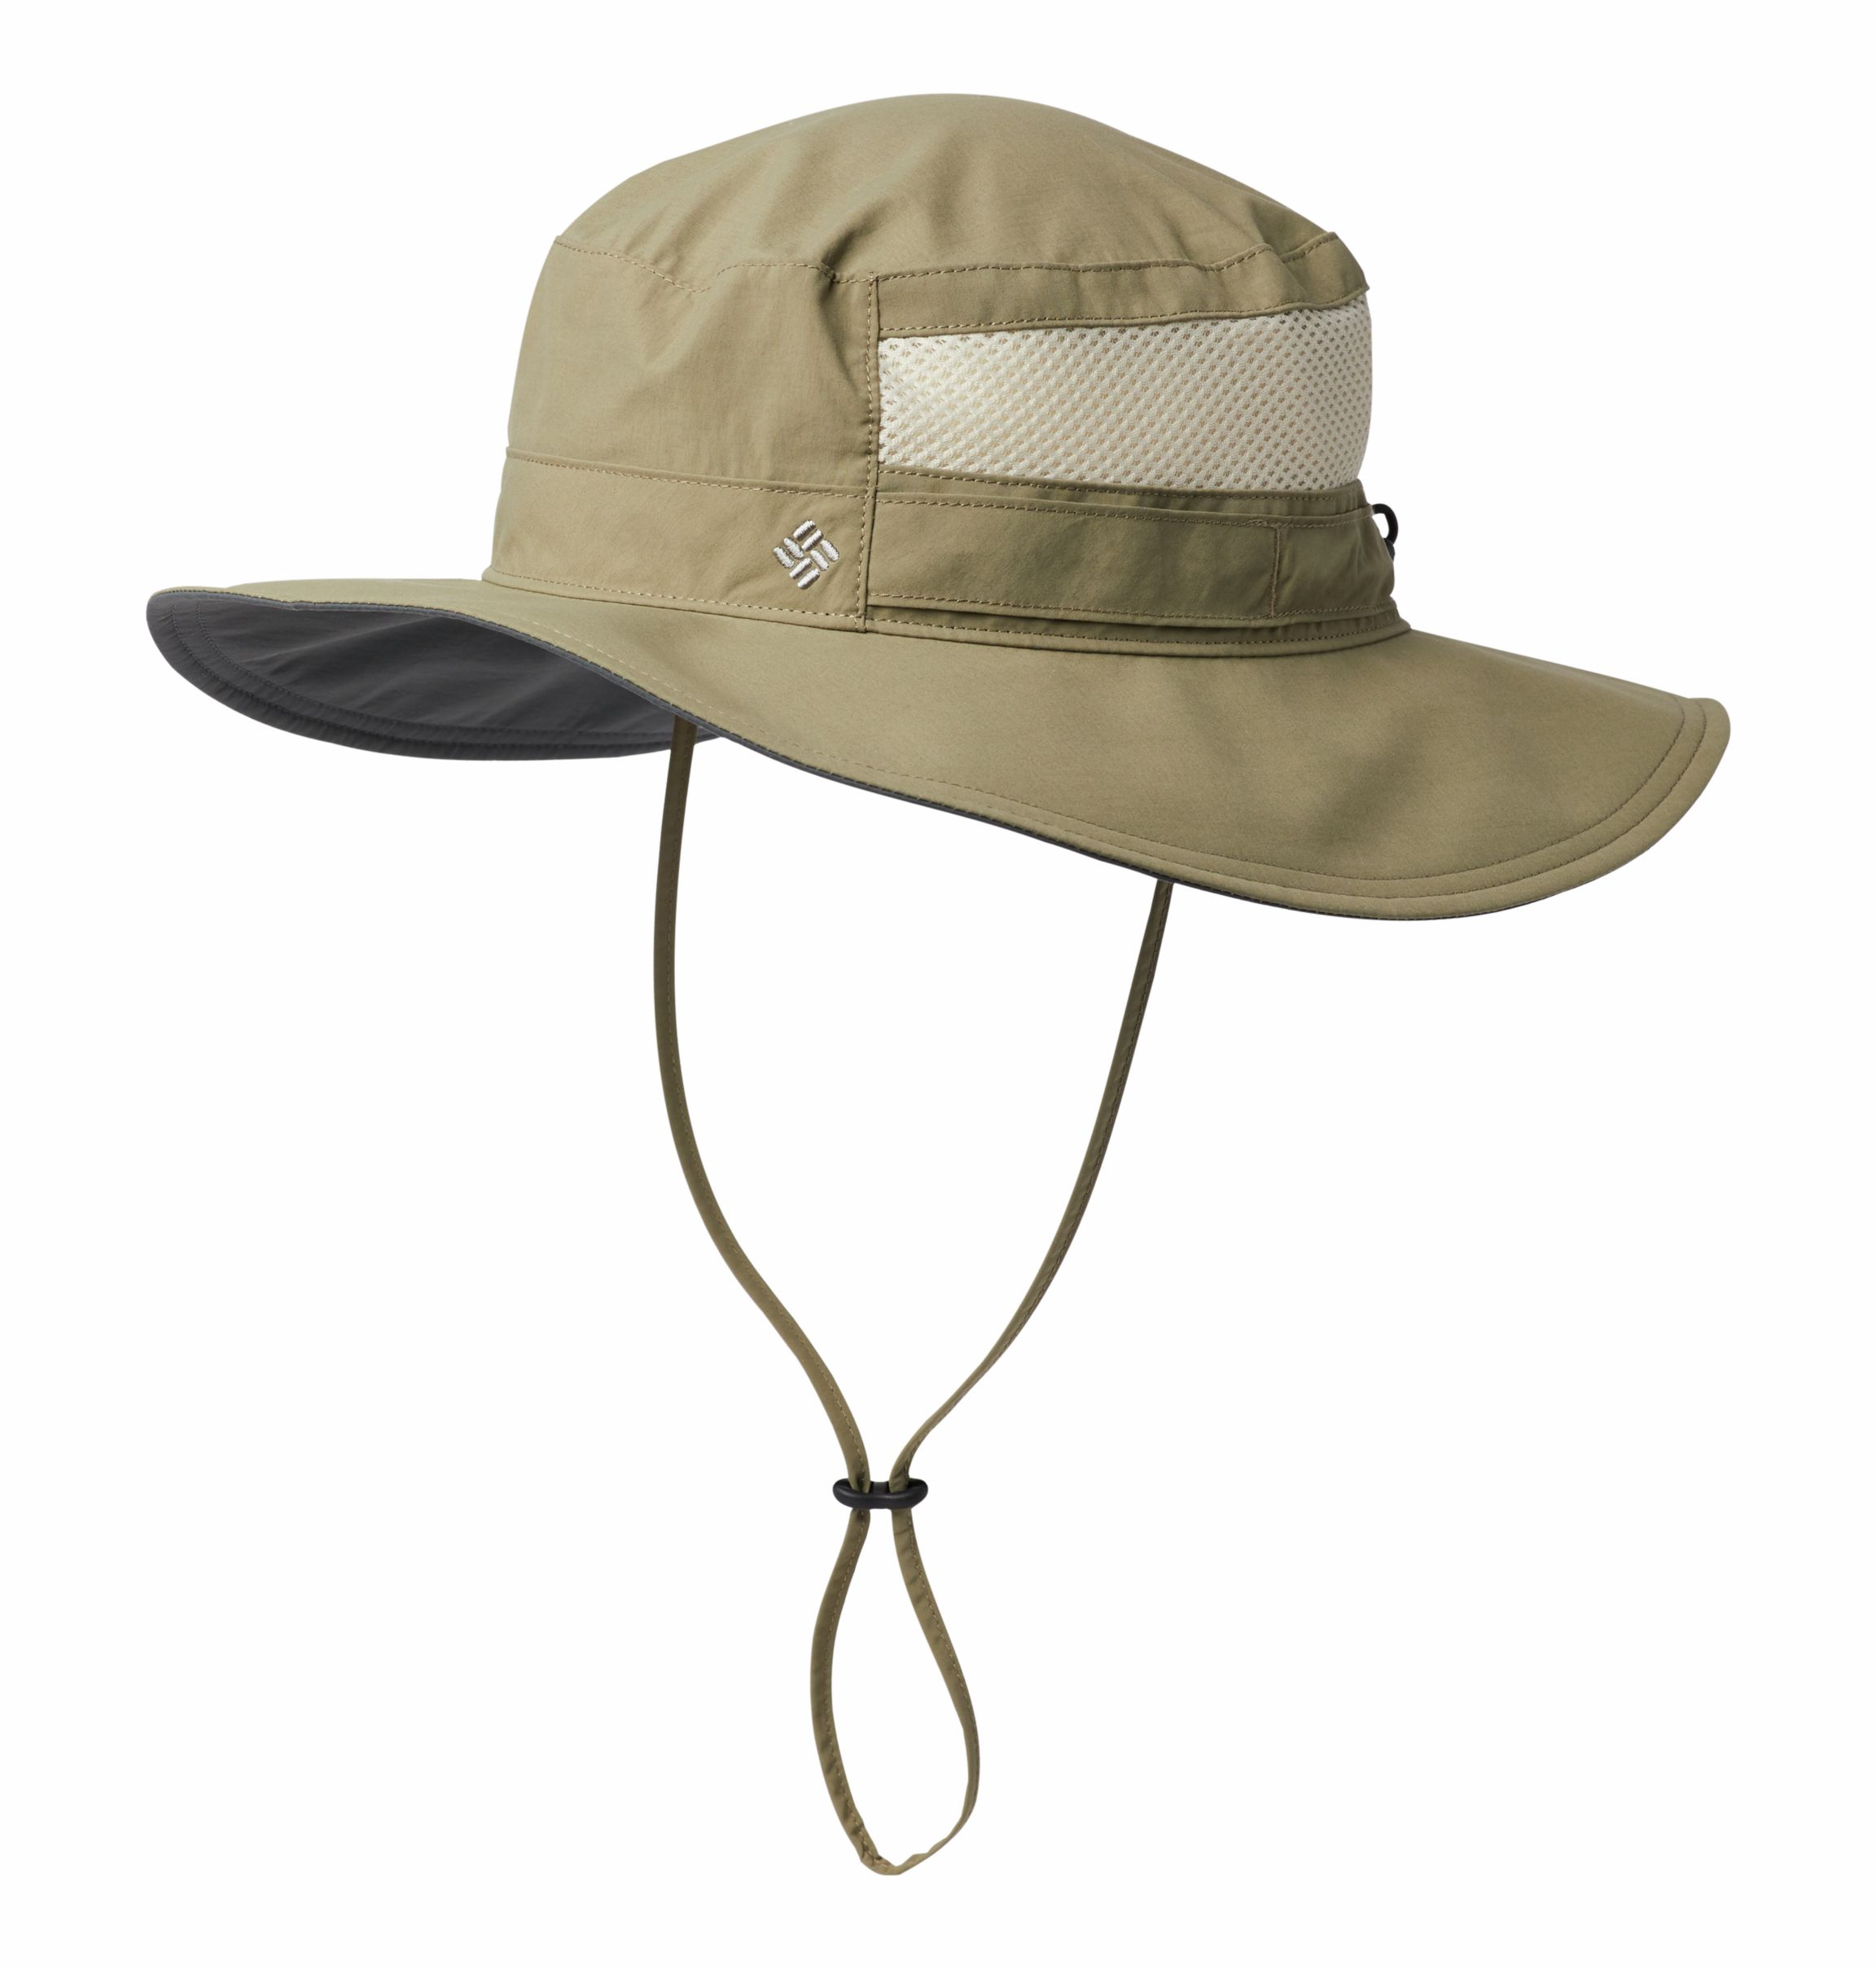 Columbia Sportswear Unisex Cotton Straw Gardening Fishing Sun Boonie Hat Sz  L/XL 